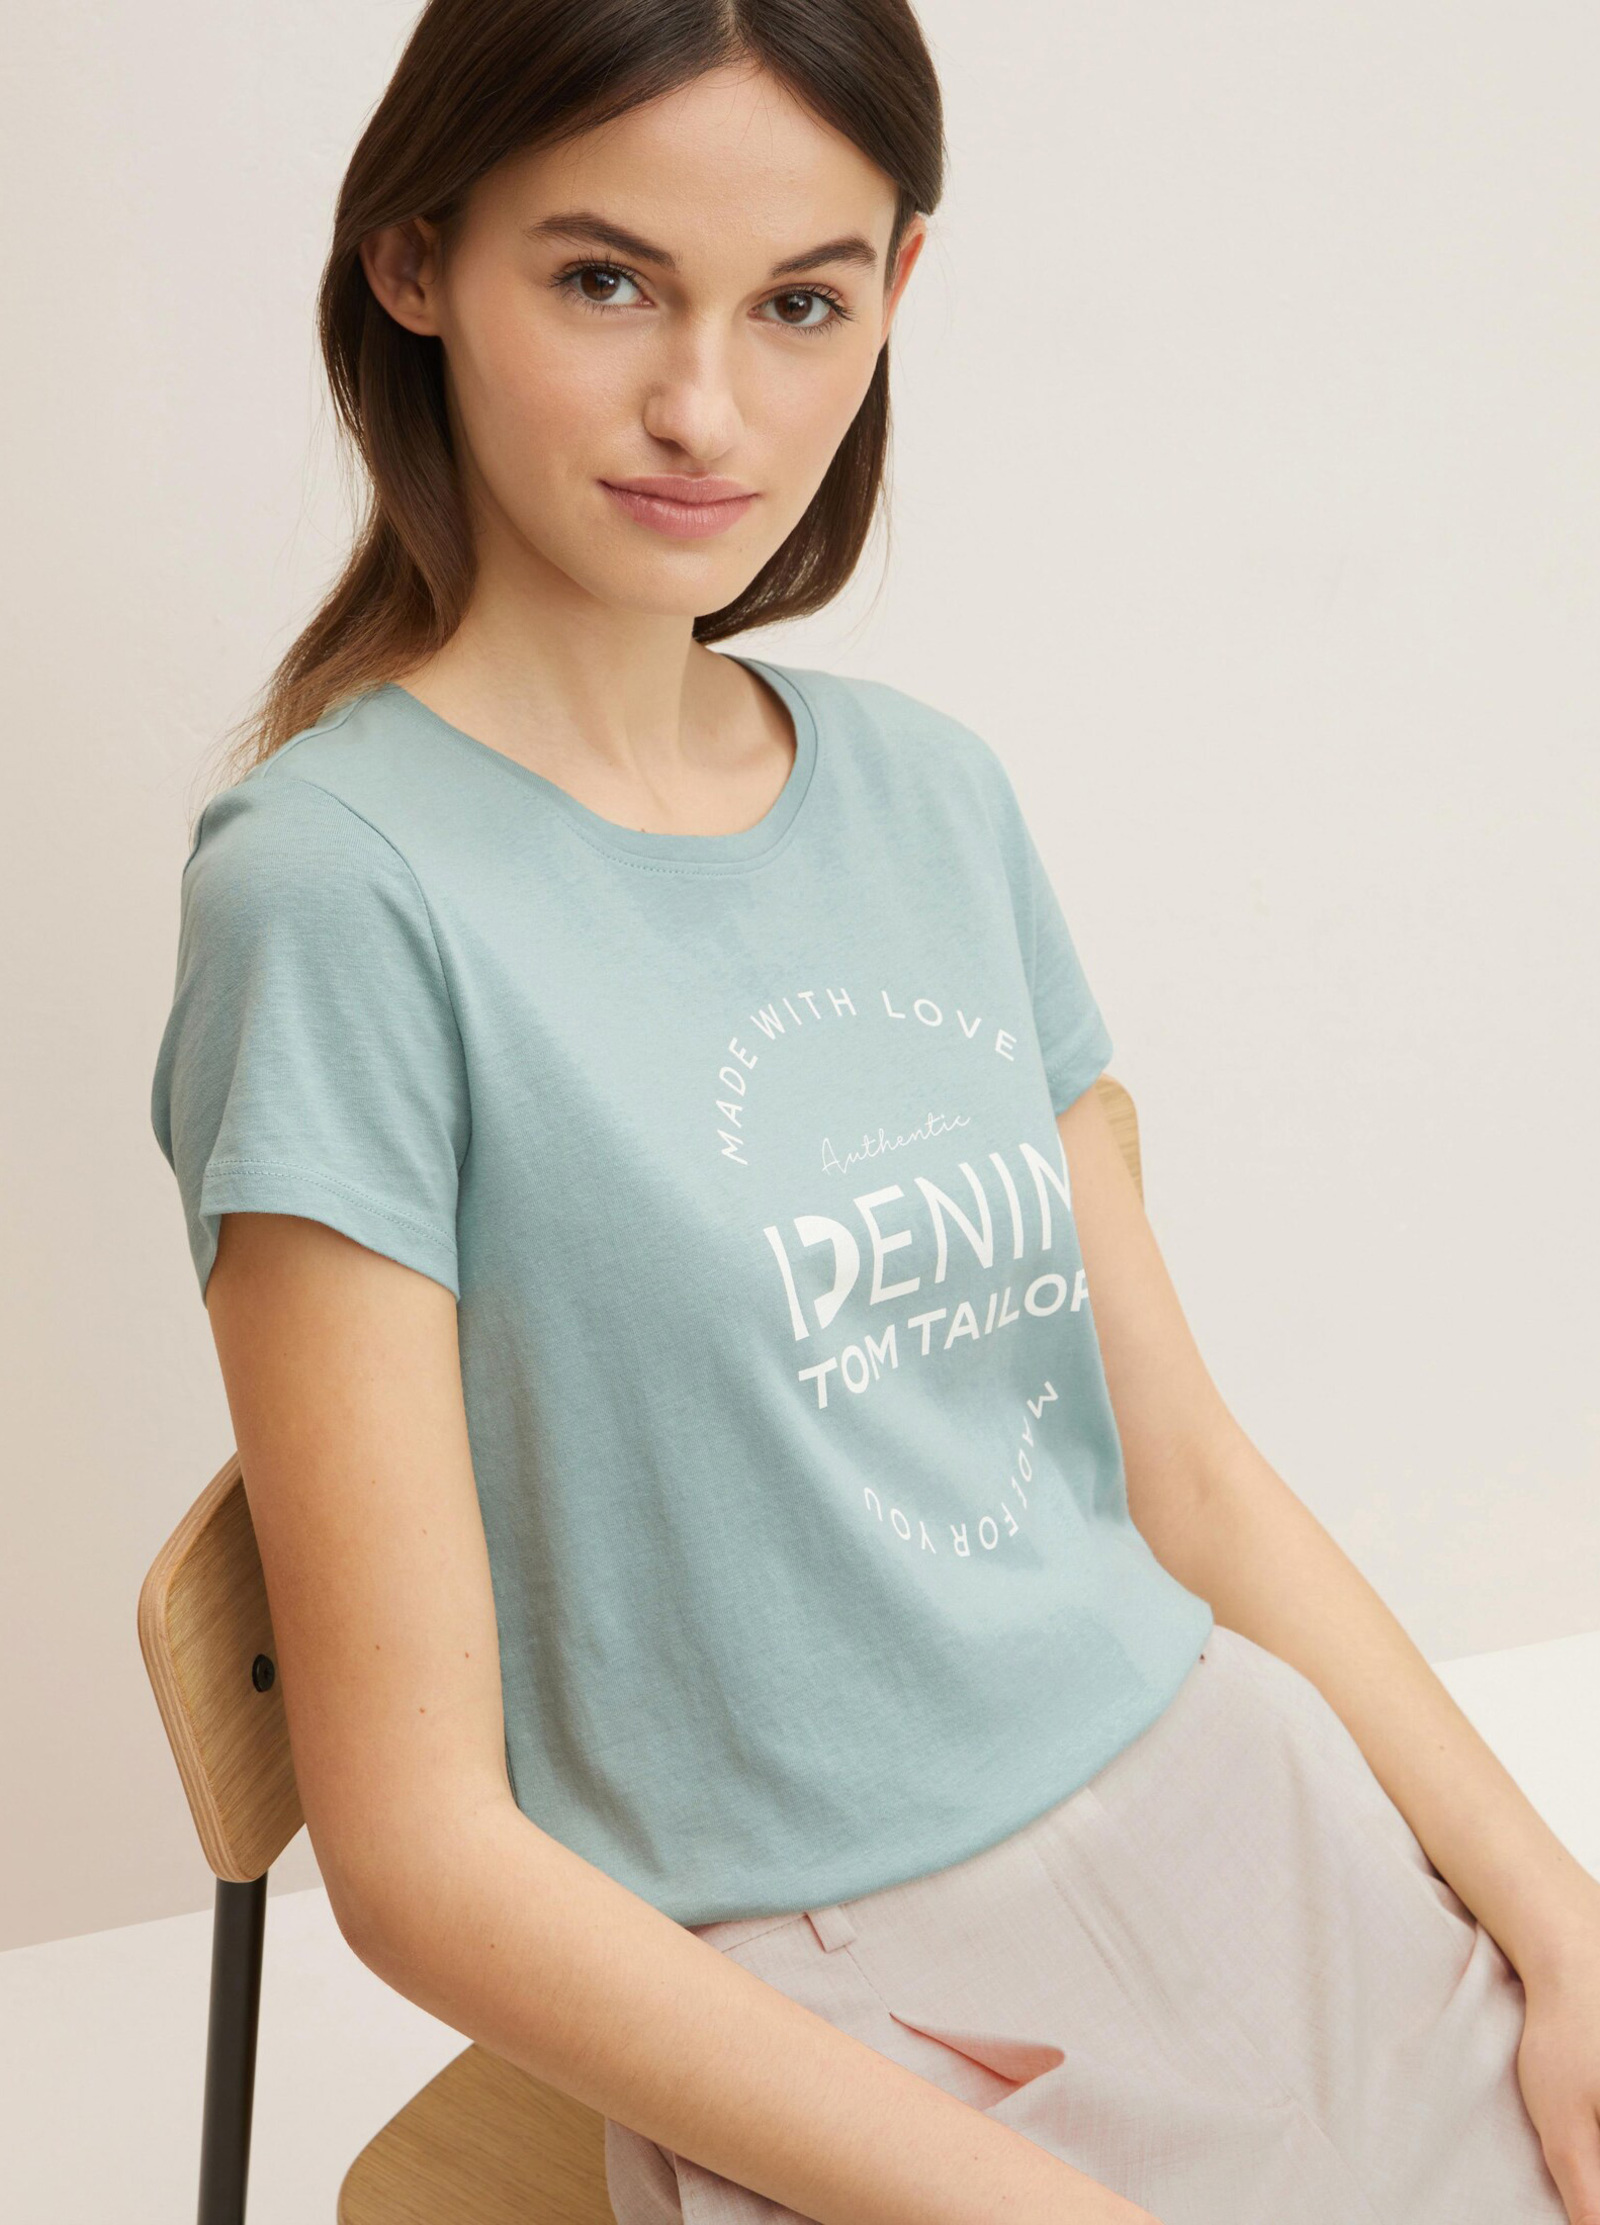 Tom Print with Denim T-shirt Tailor® Logo Größe Green - S Smoke